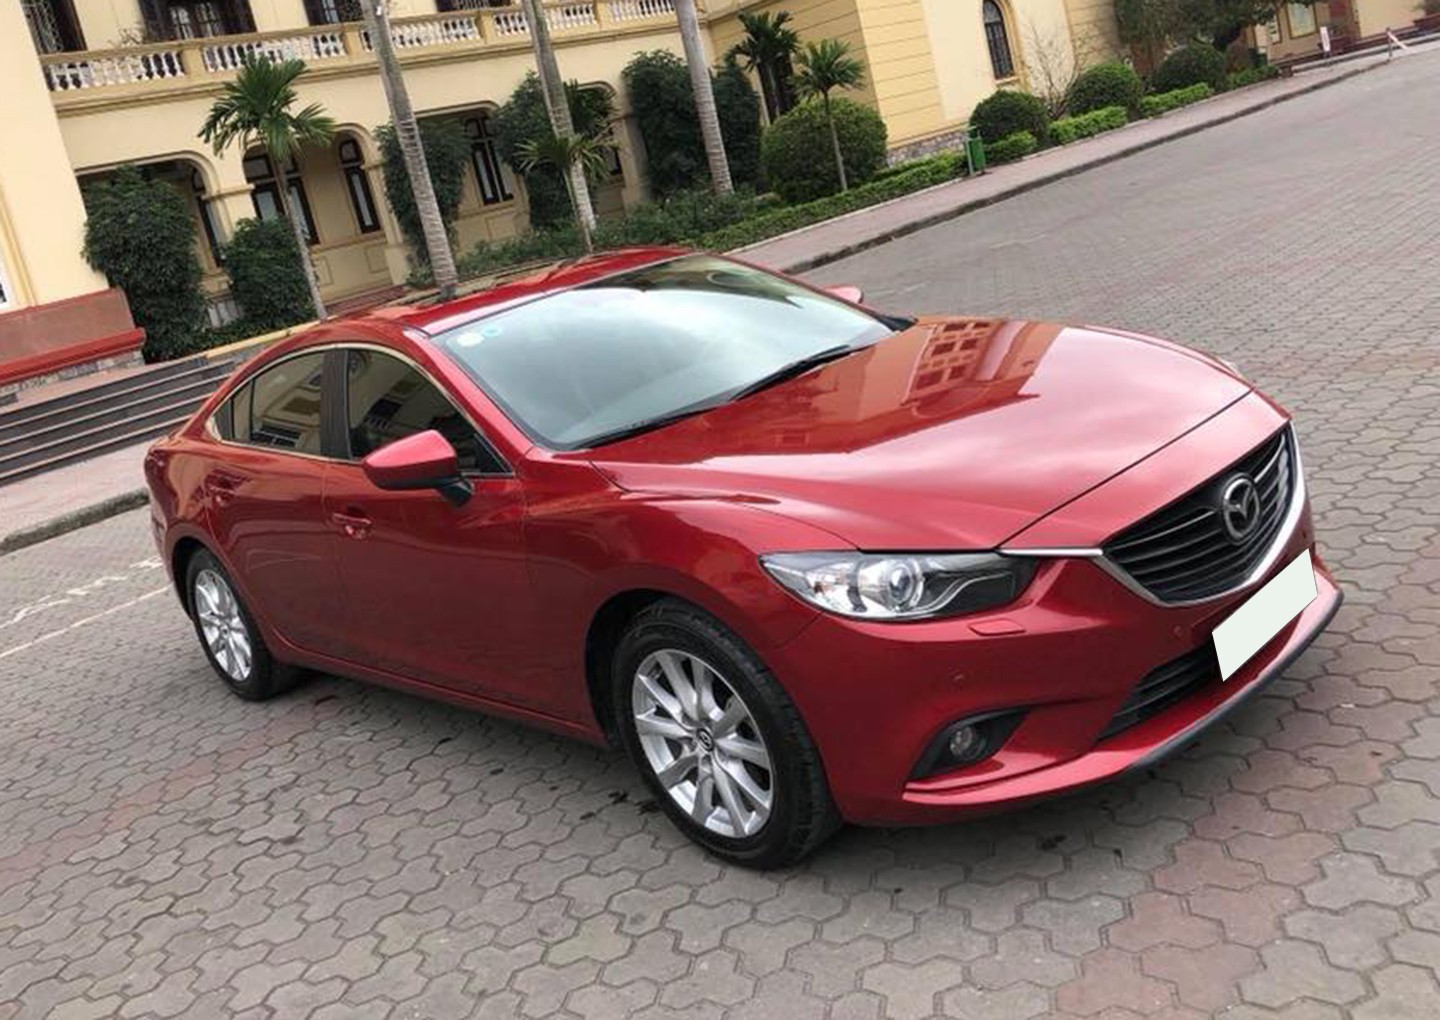 2014 Mazda Mazda6 Models Trims Information and Details  Autobytelcom